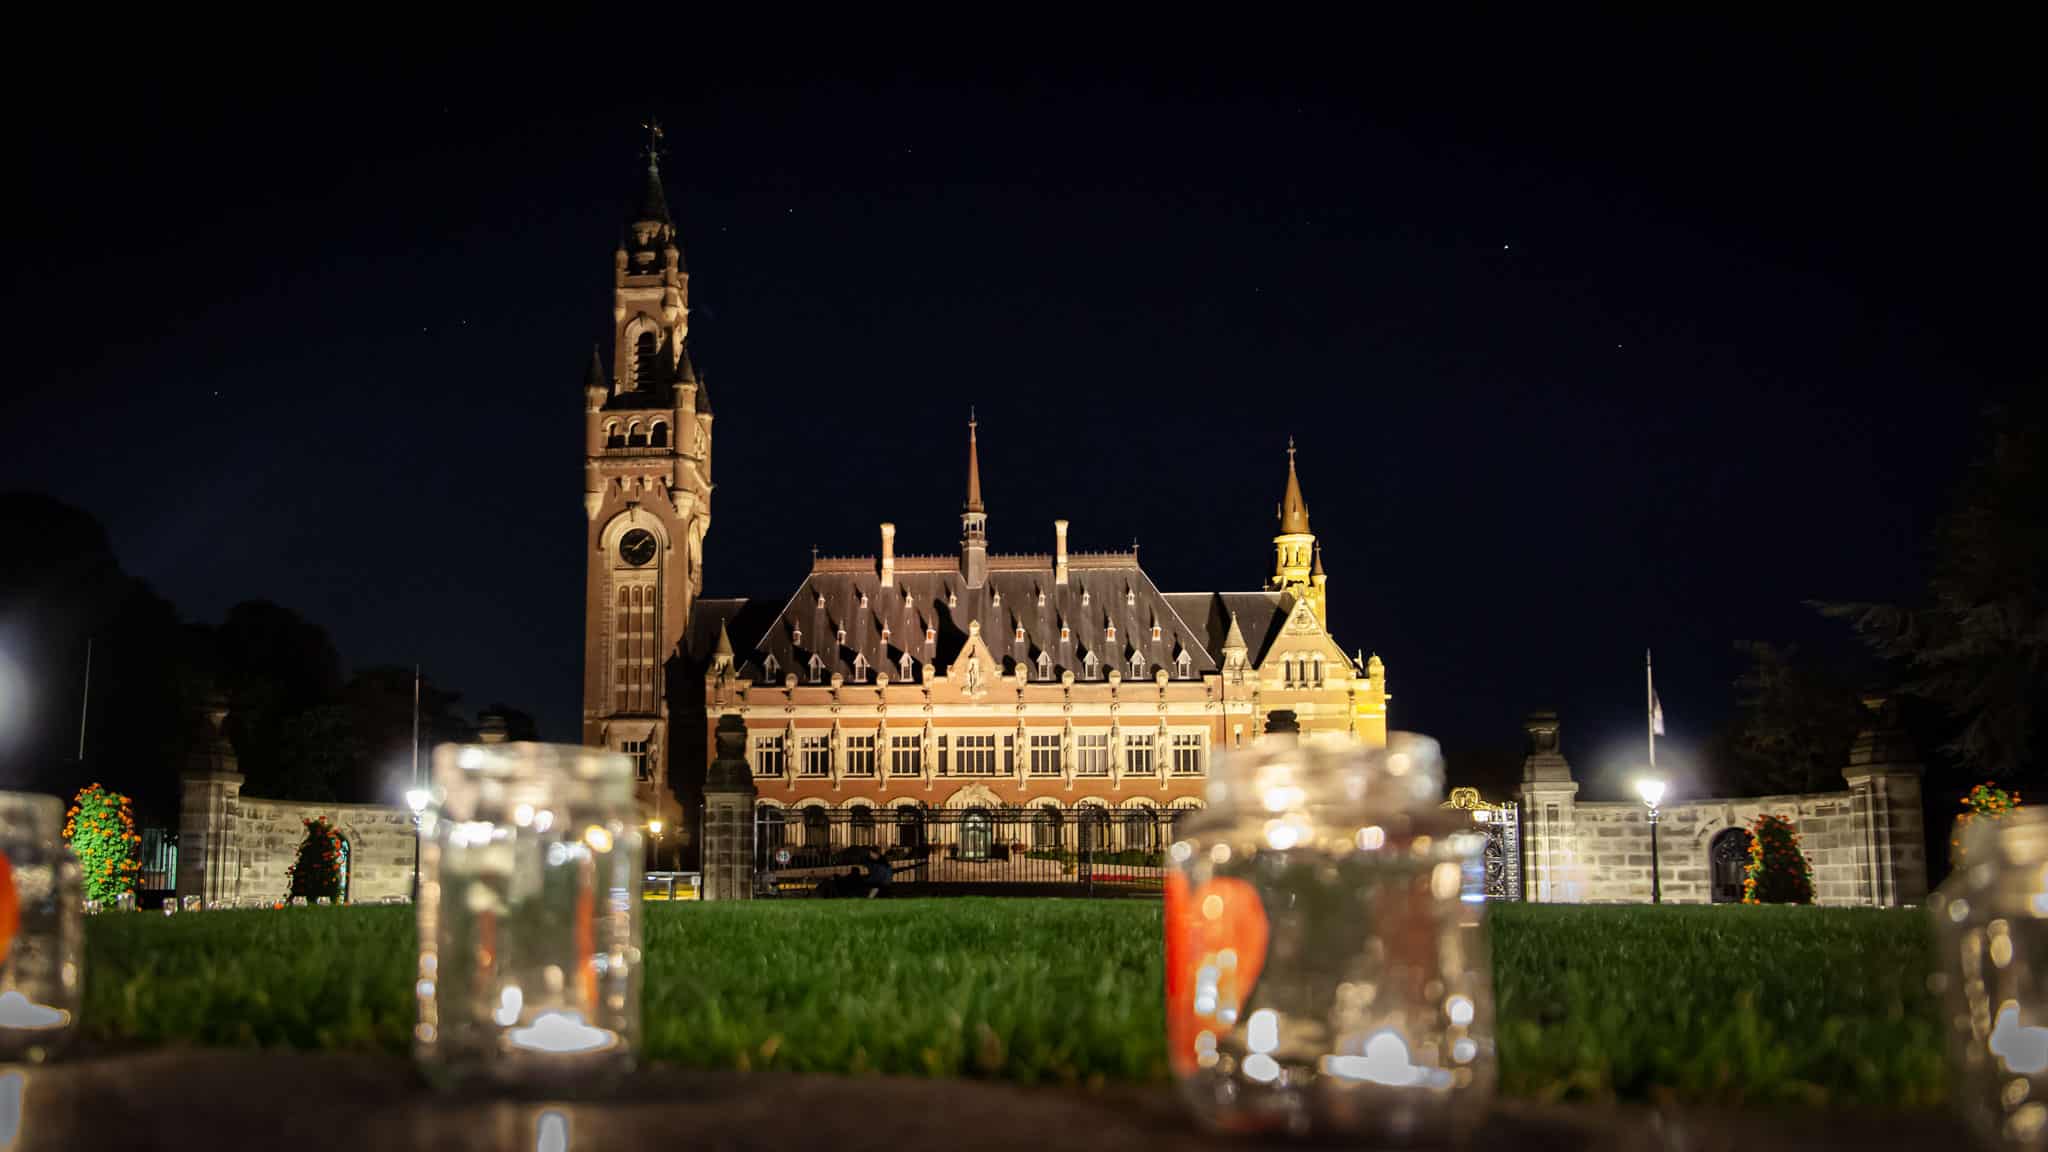 The Peace Palace at night